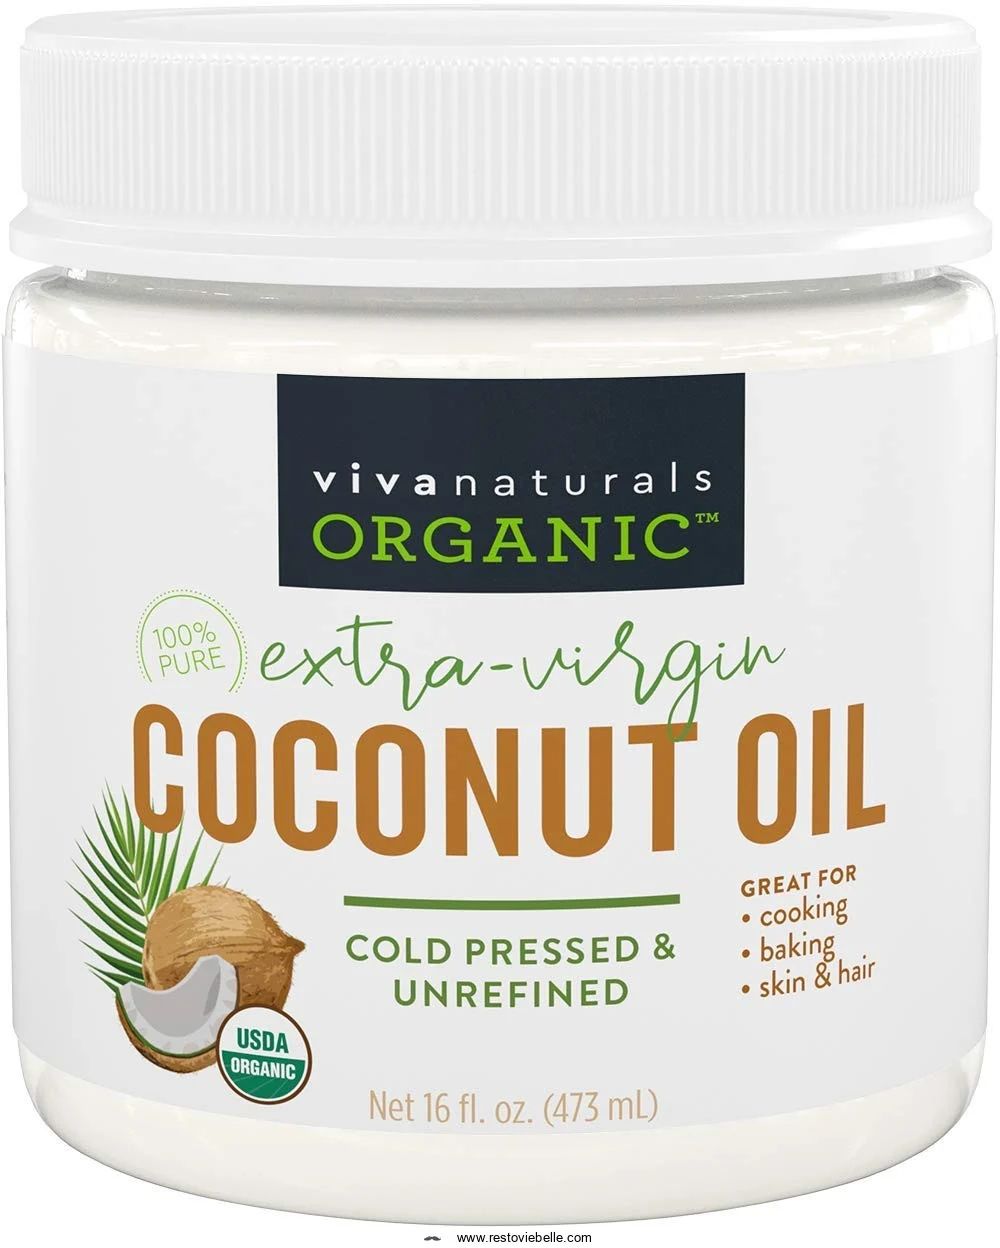 Viva Naturals Organic Coconut Oil,